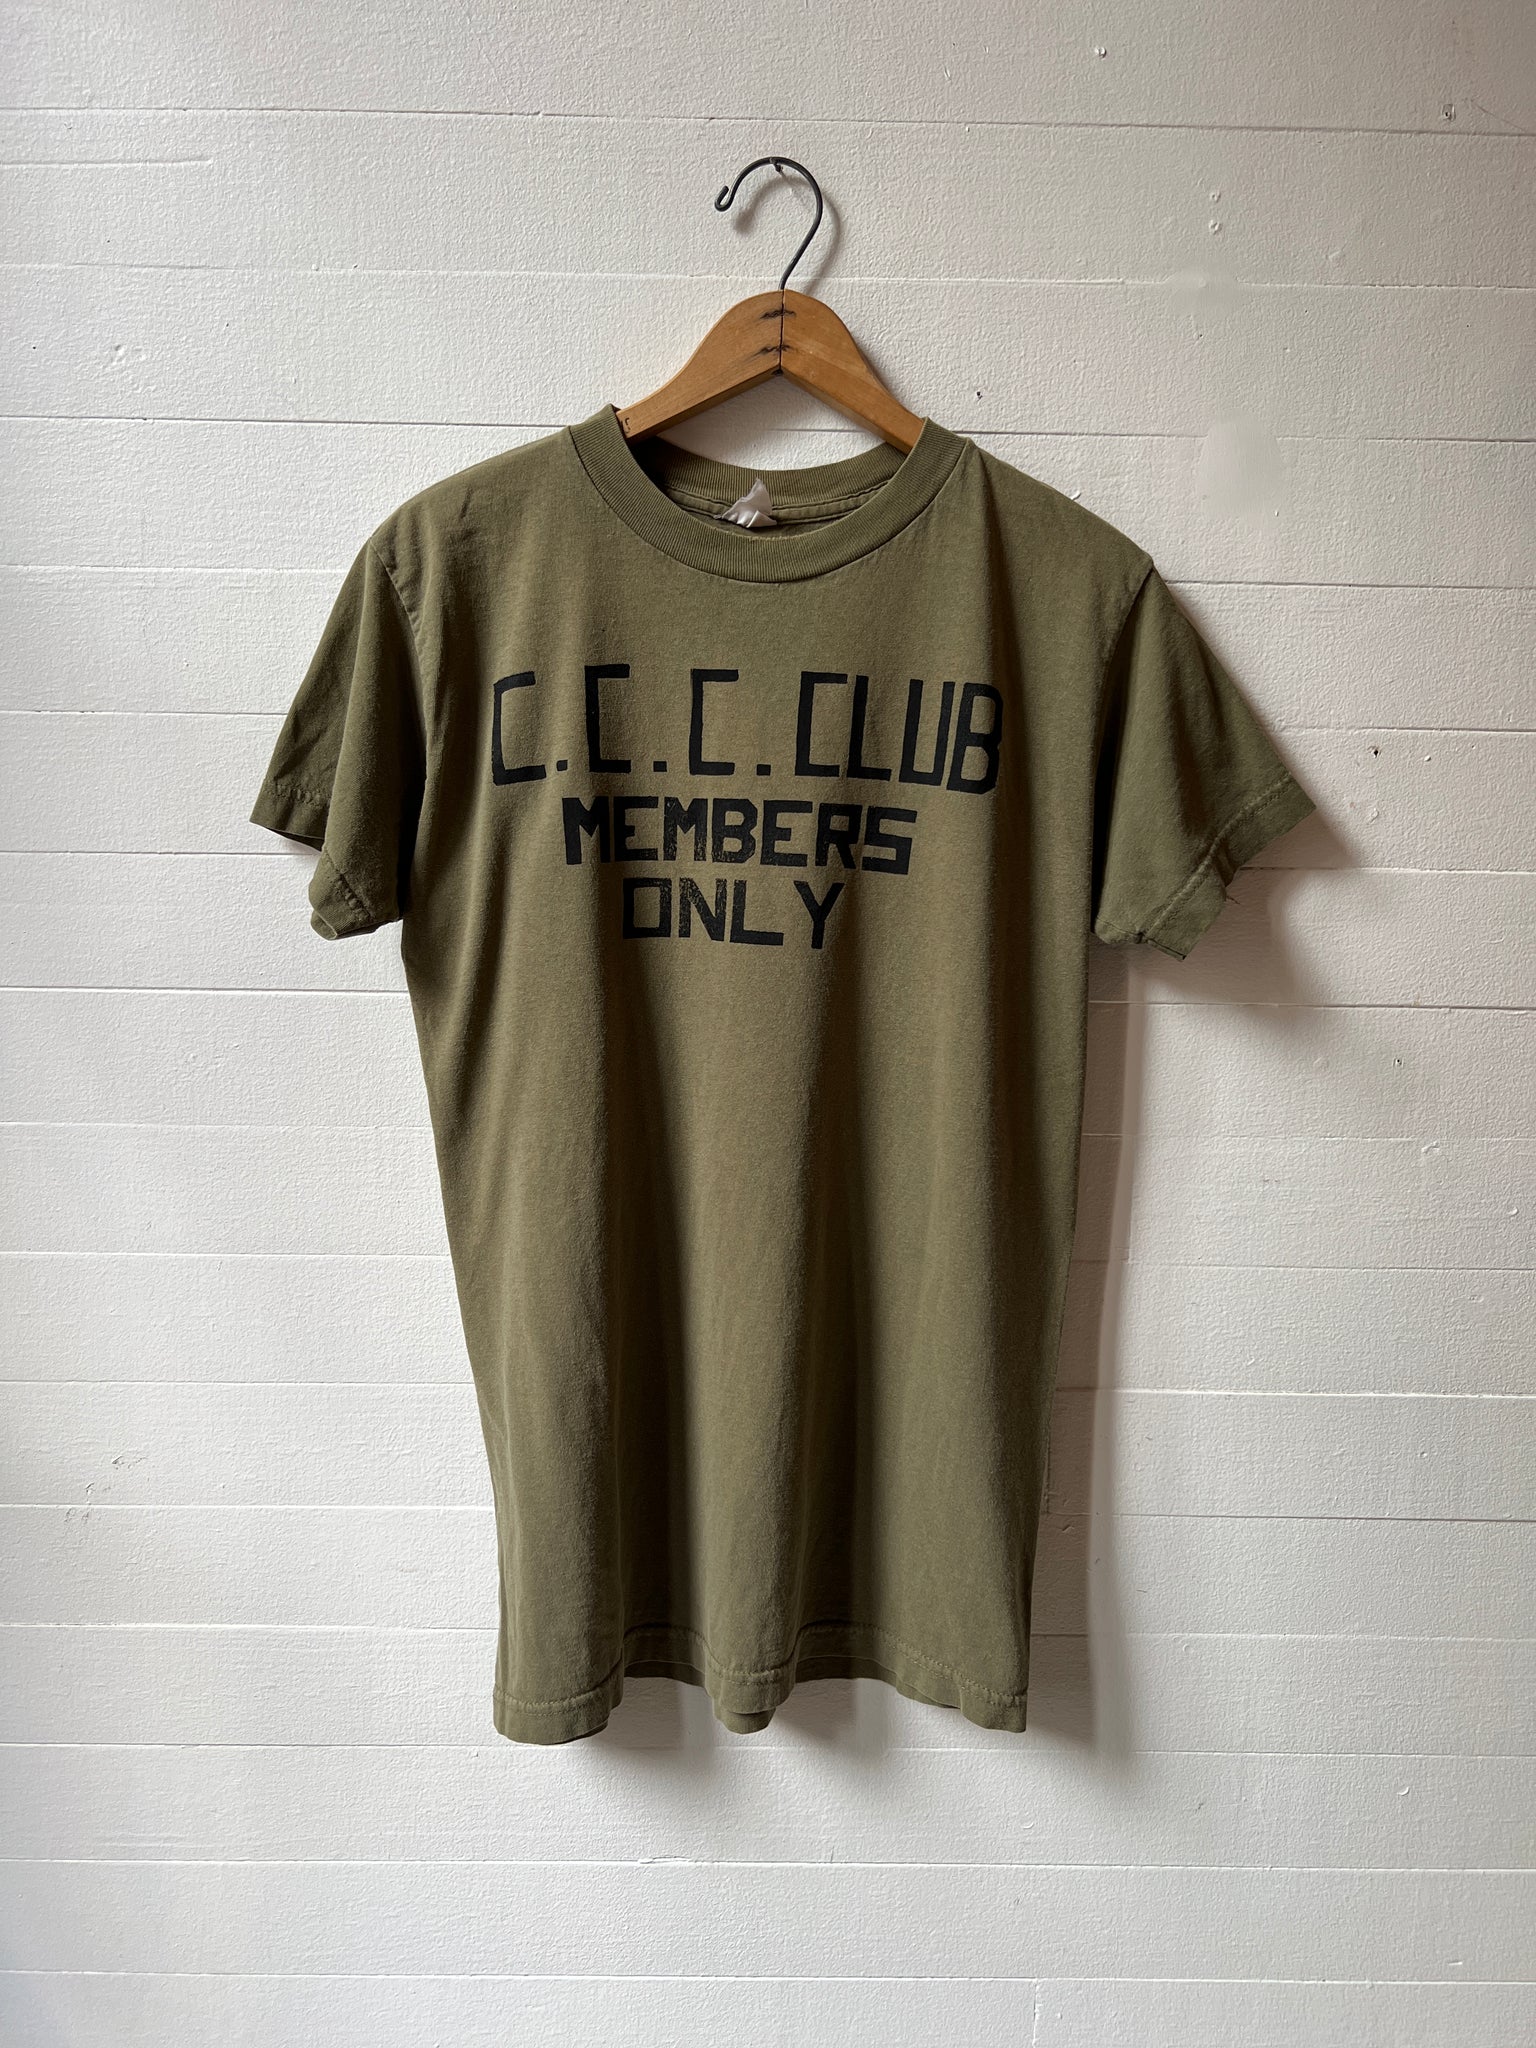 c.c.c. club - green